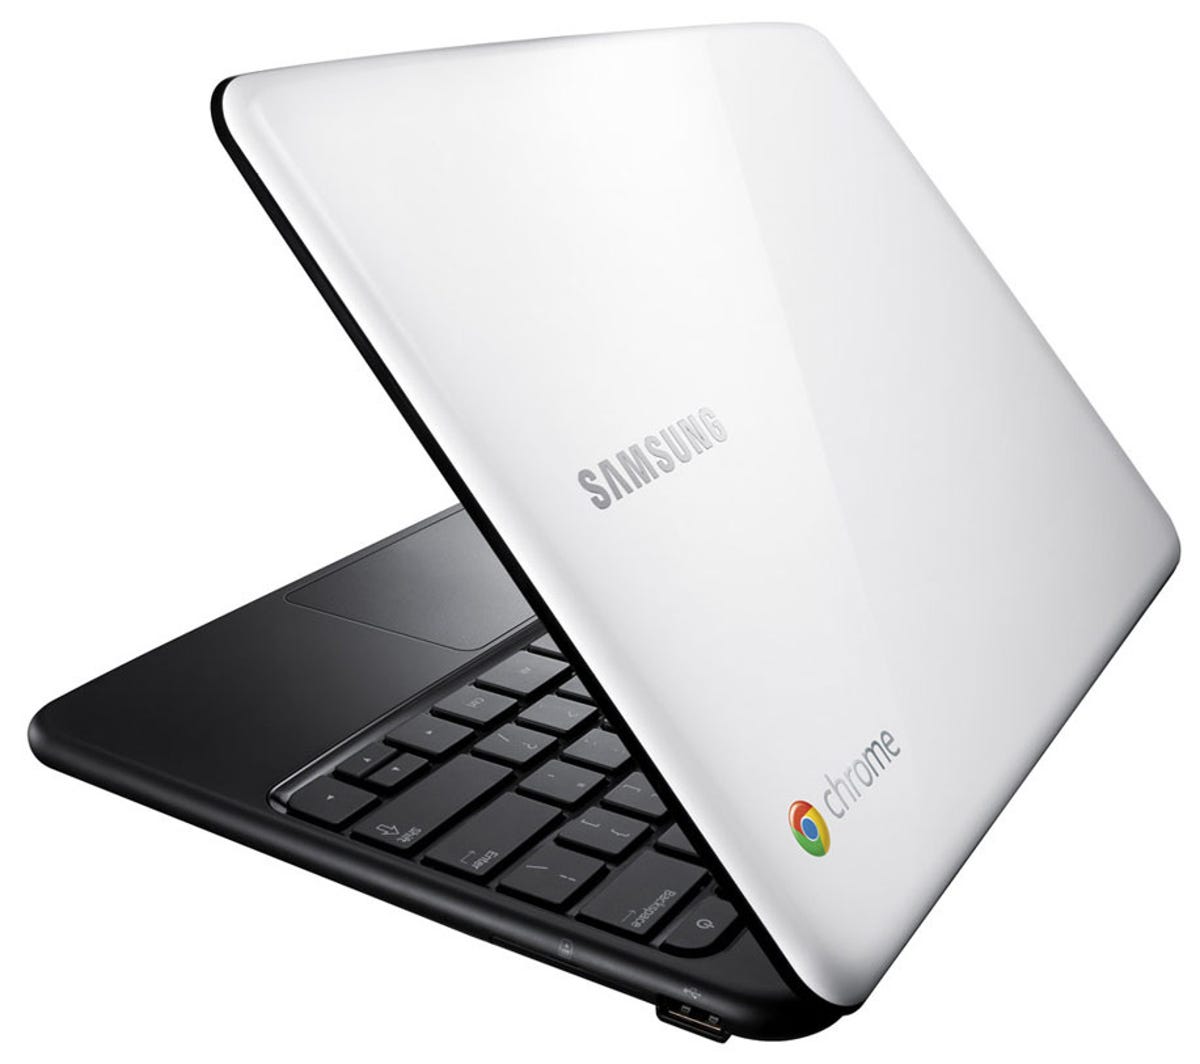 Samsung's Series 5 Chromebook